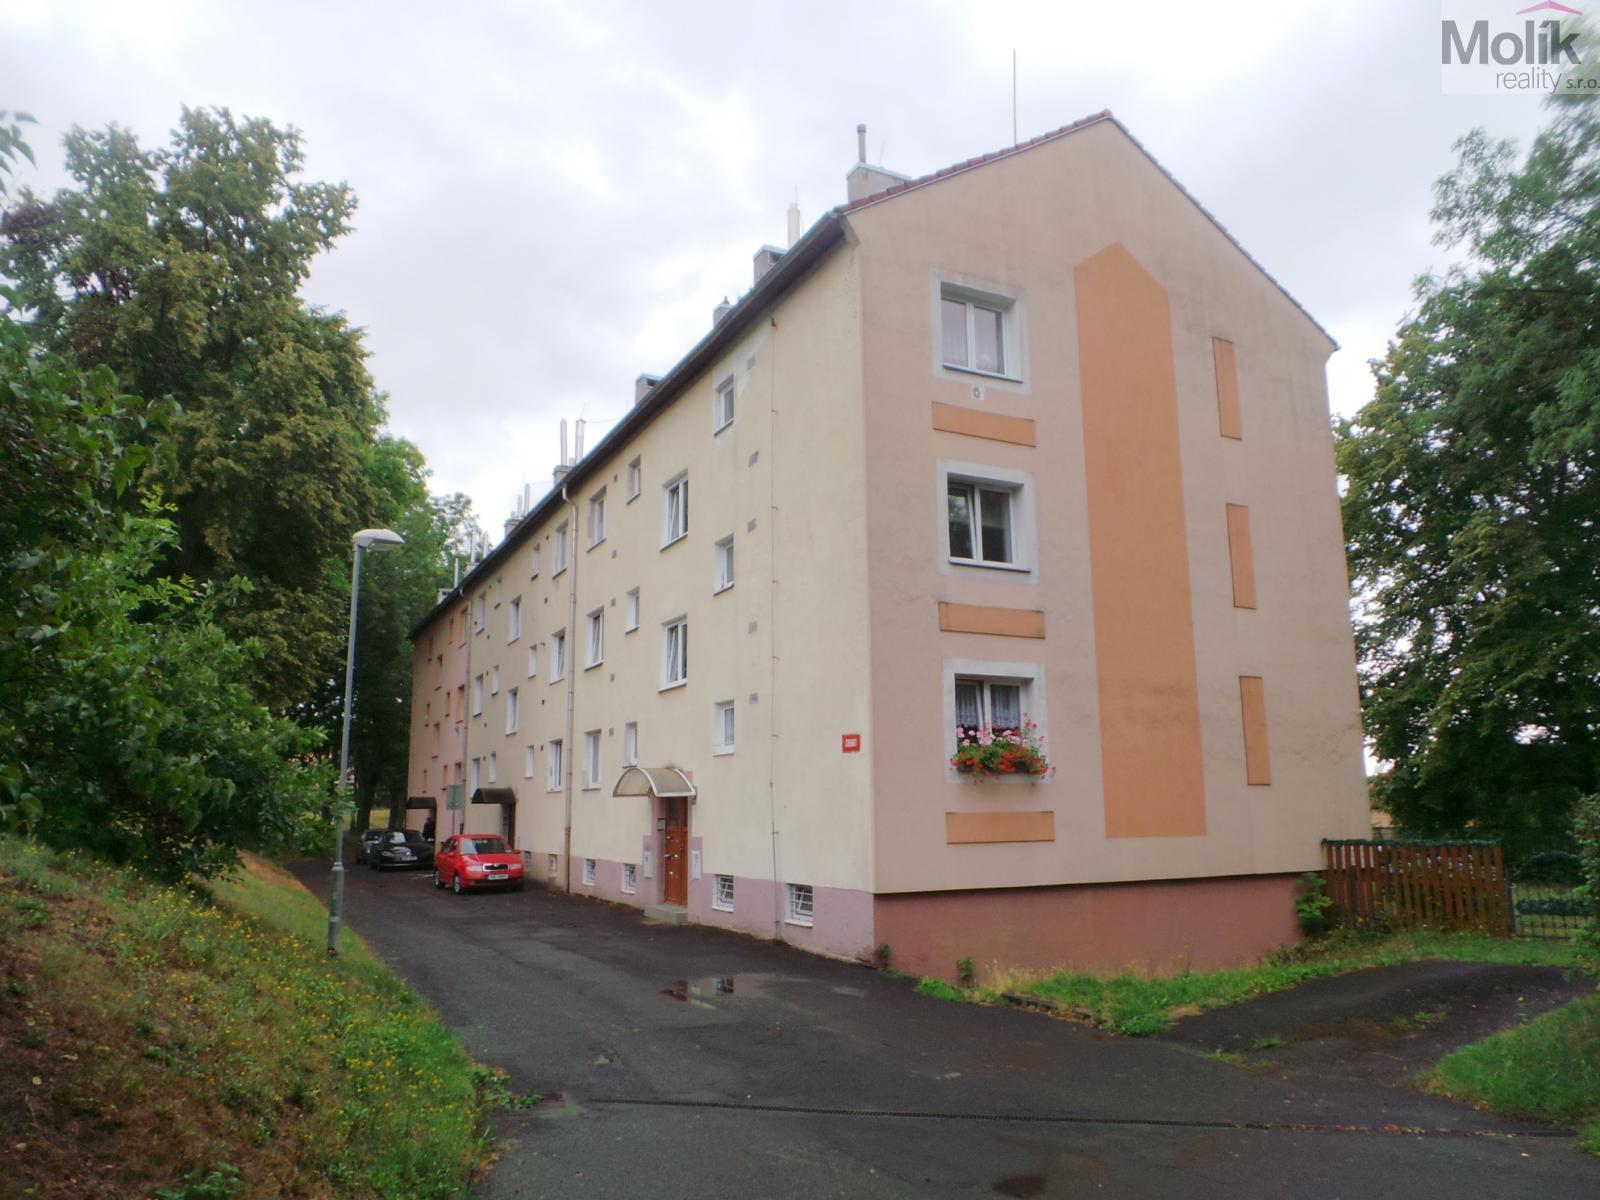 Prodej bytové jednotky 2+1, 56 m2, OV Litvínov - Hamr